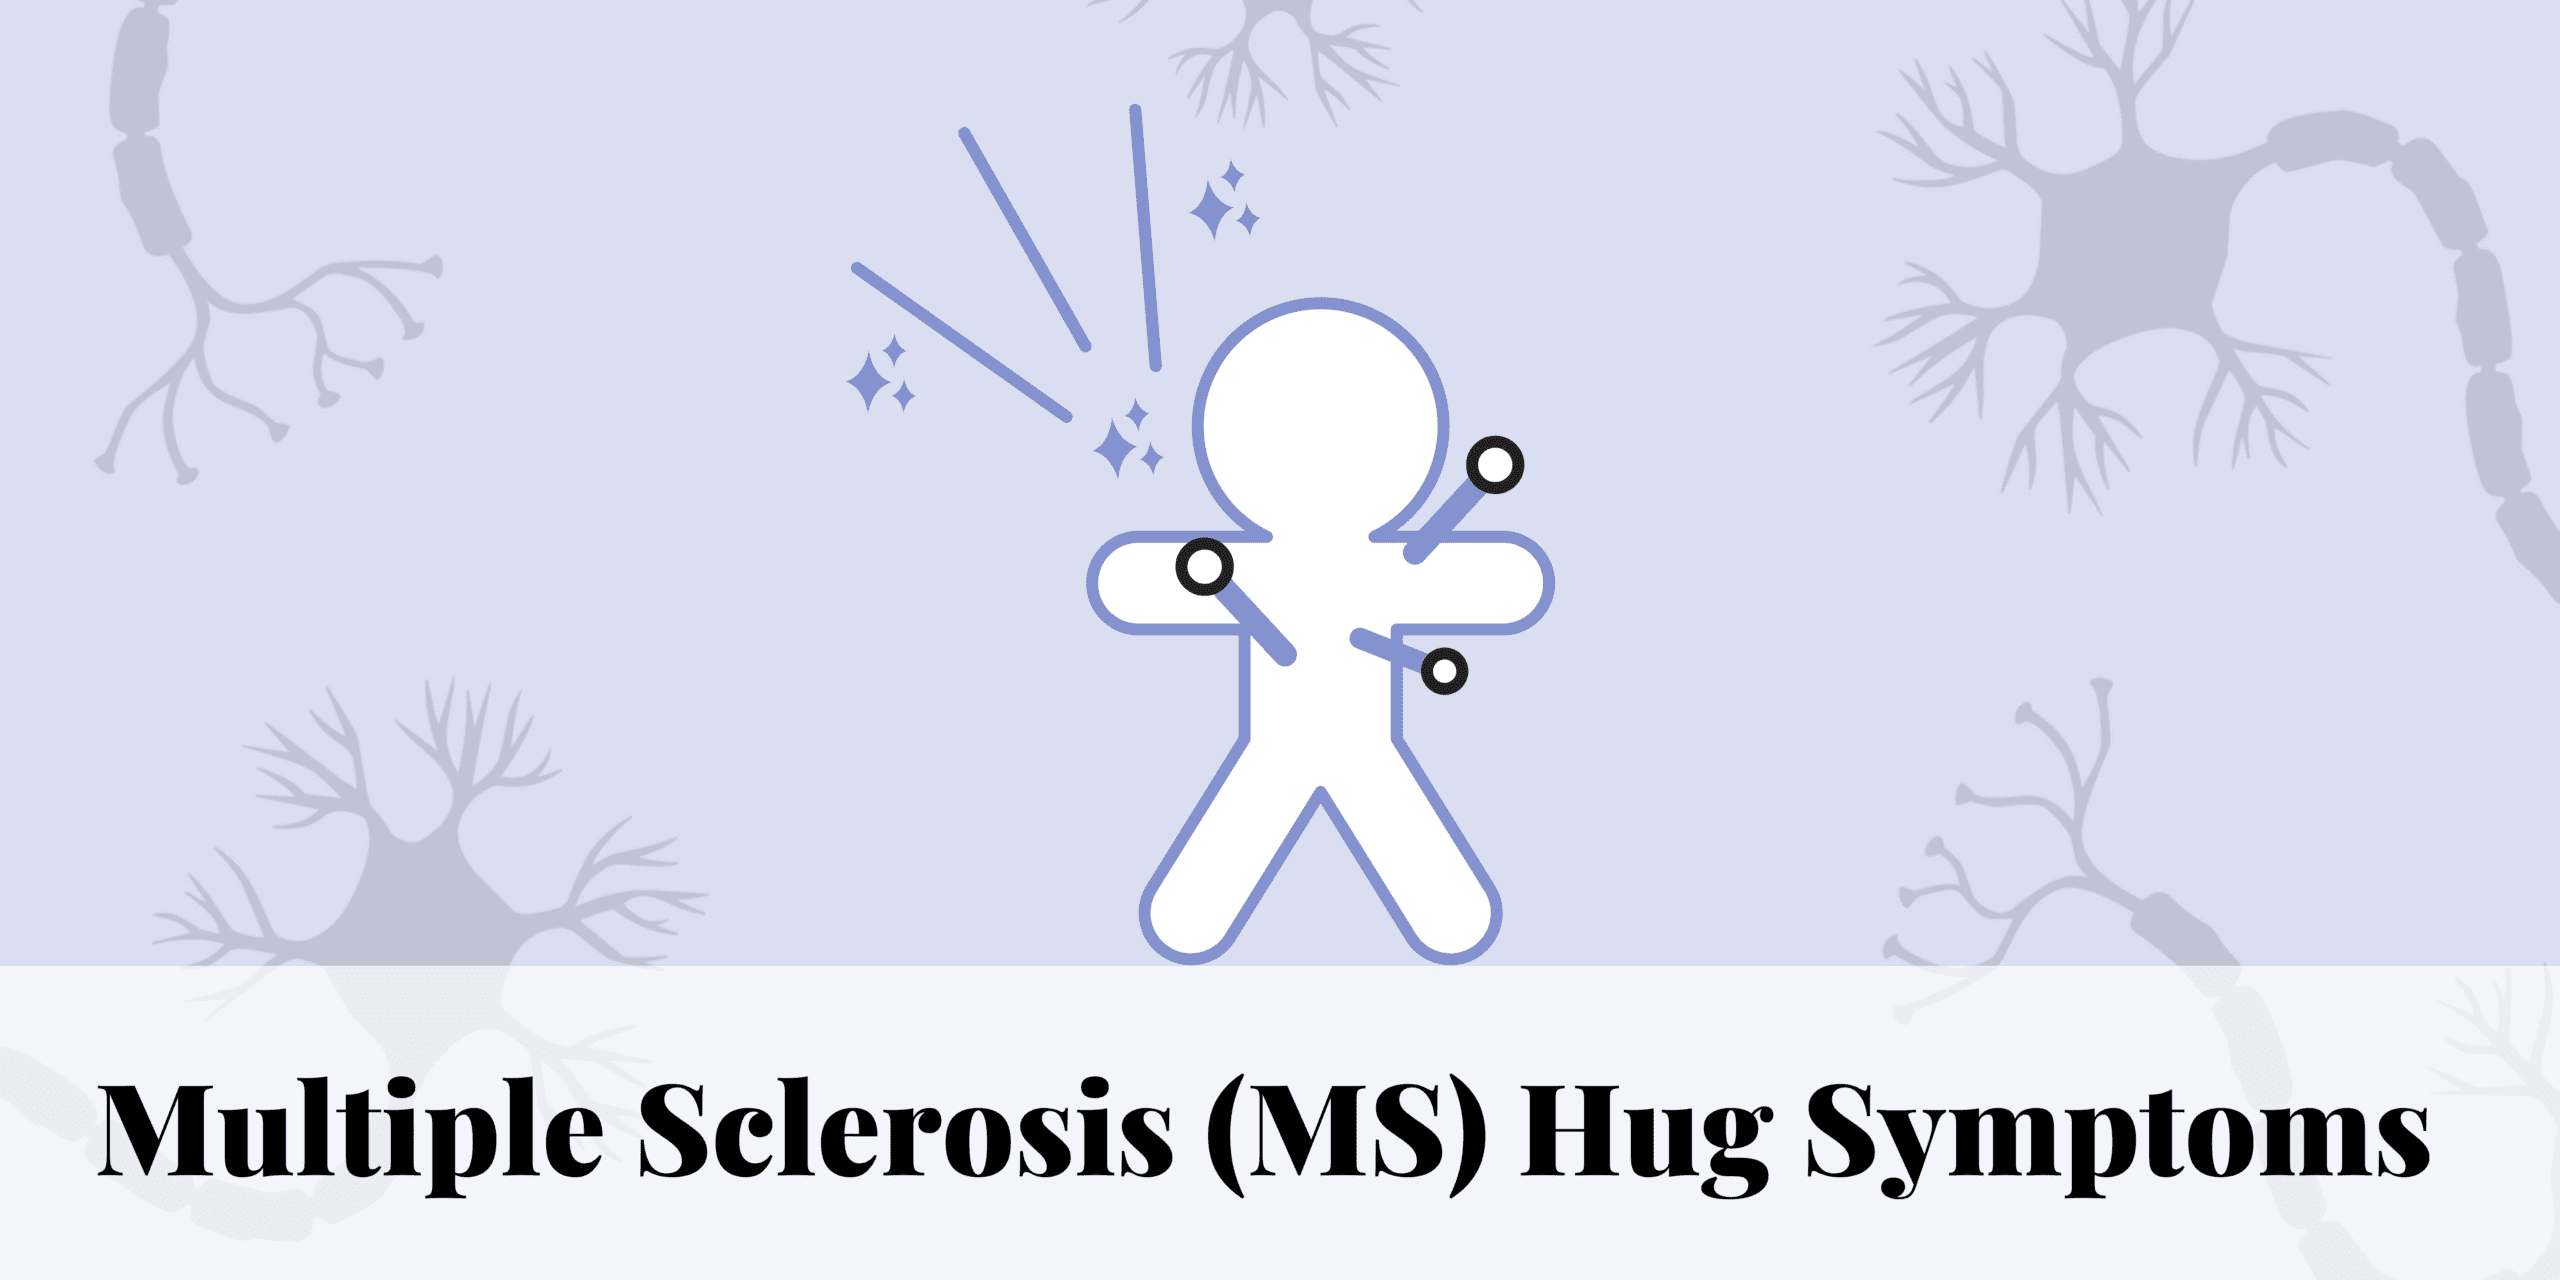 MS Hug Symptoms